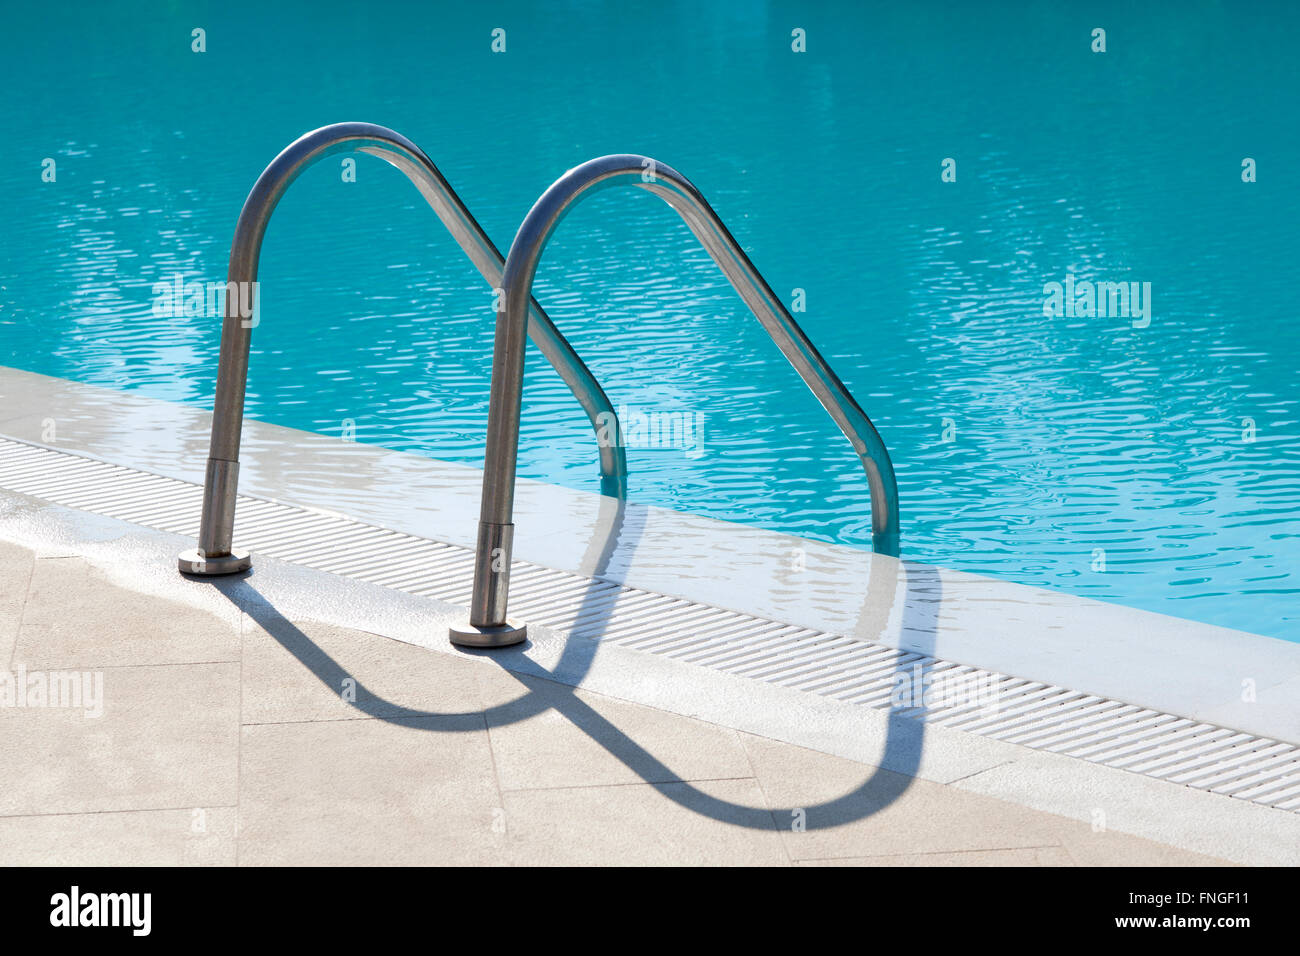 Escaleras de metal que conduce a una piscina Foto de stock